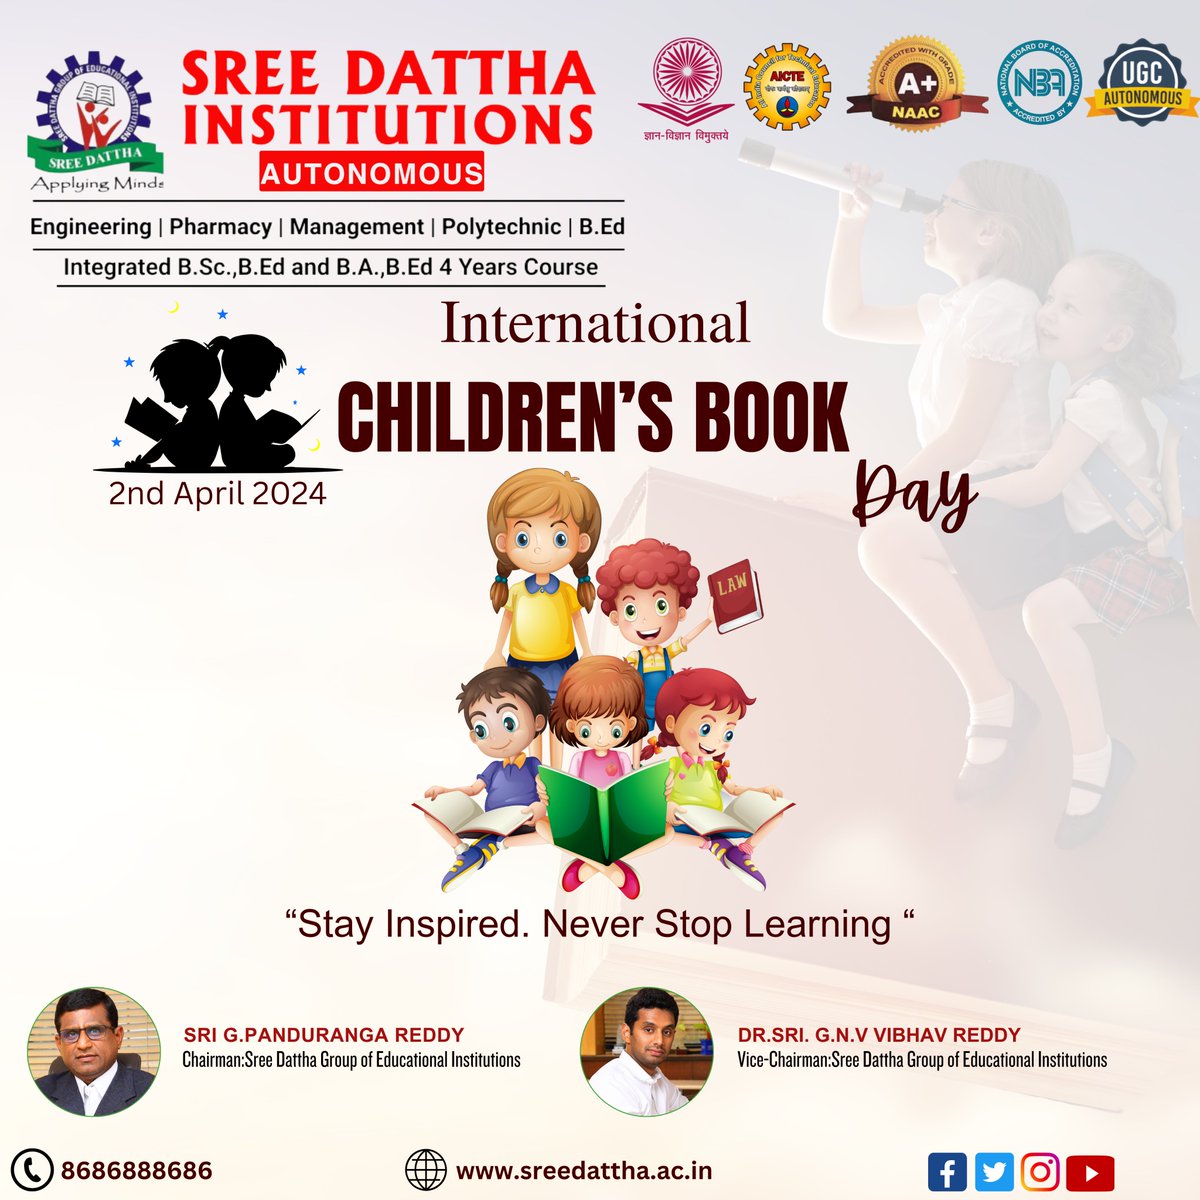 “Today a reader, tomorrow a leader.”
#internationalchildrenbookday 

#SDES #SDGI #SDIP #ChildrensBookDay #KidsLit #ReadingIsMagic #Bookworms #ReadToGrow #Storytime #KidLit #LiteracyForKids #ImaginationUnleashed #CelebrateBooks #PharmacyCollege #BestcollegeinHyderabad